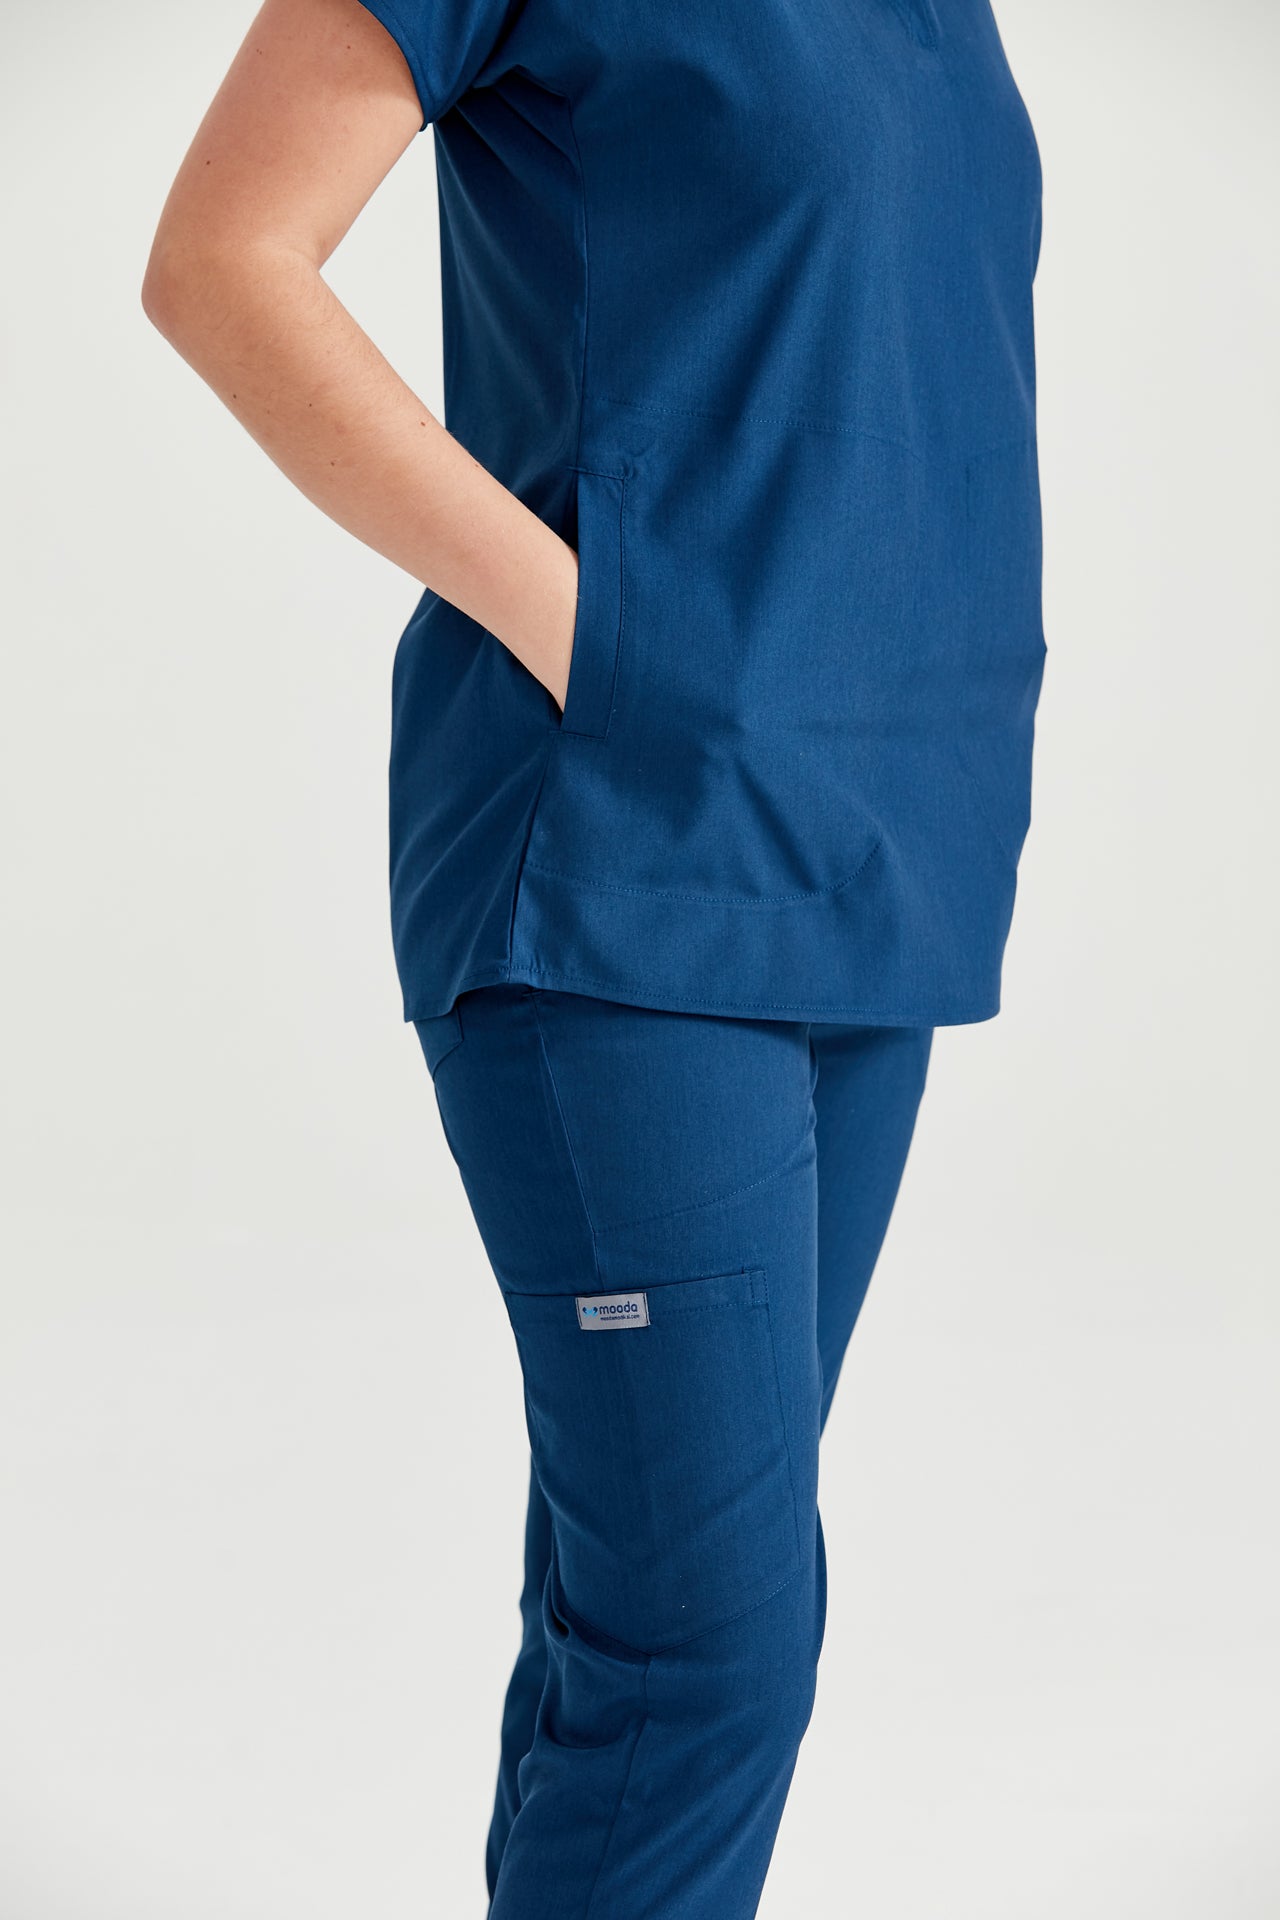 Asistenta medicala imbracata in costum medical de dama, albastru Indigo, vedere din spate